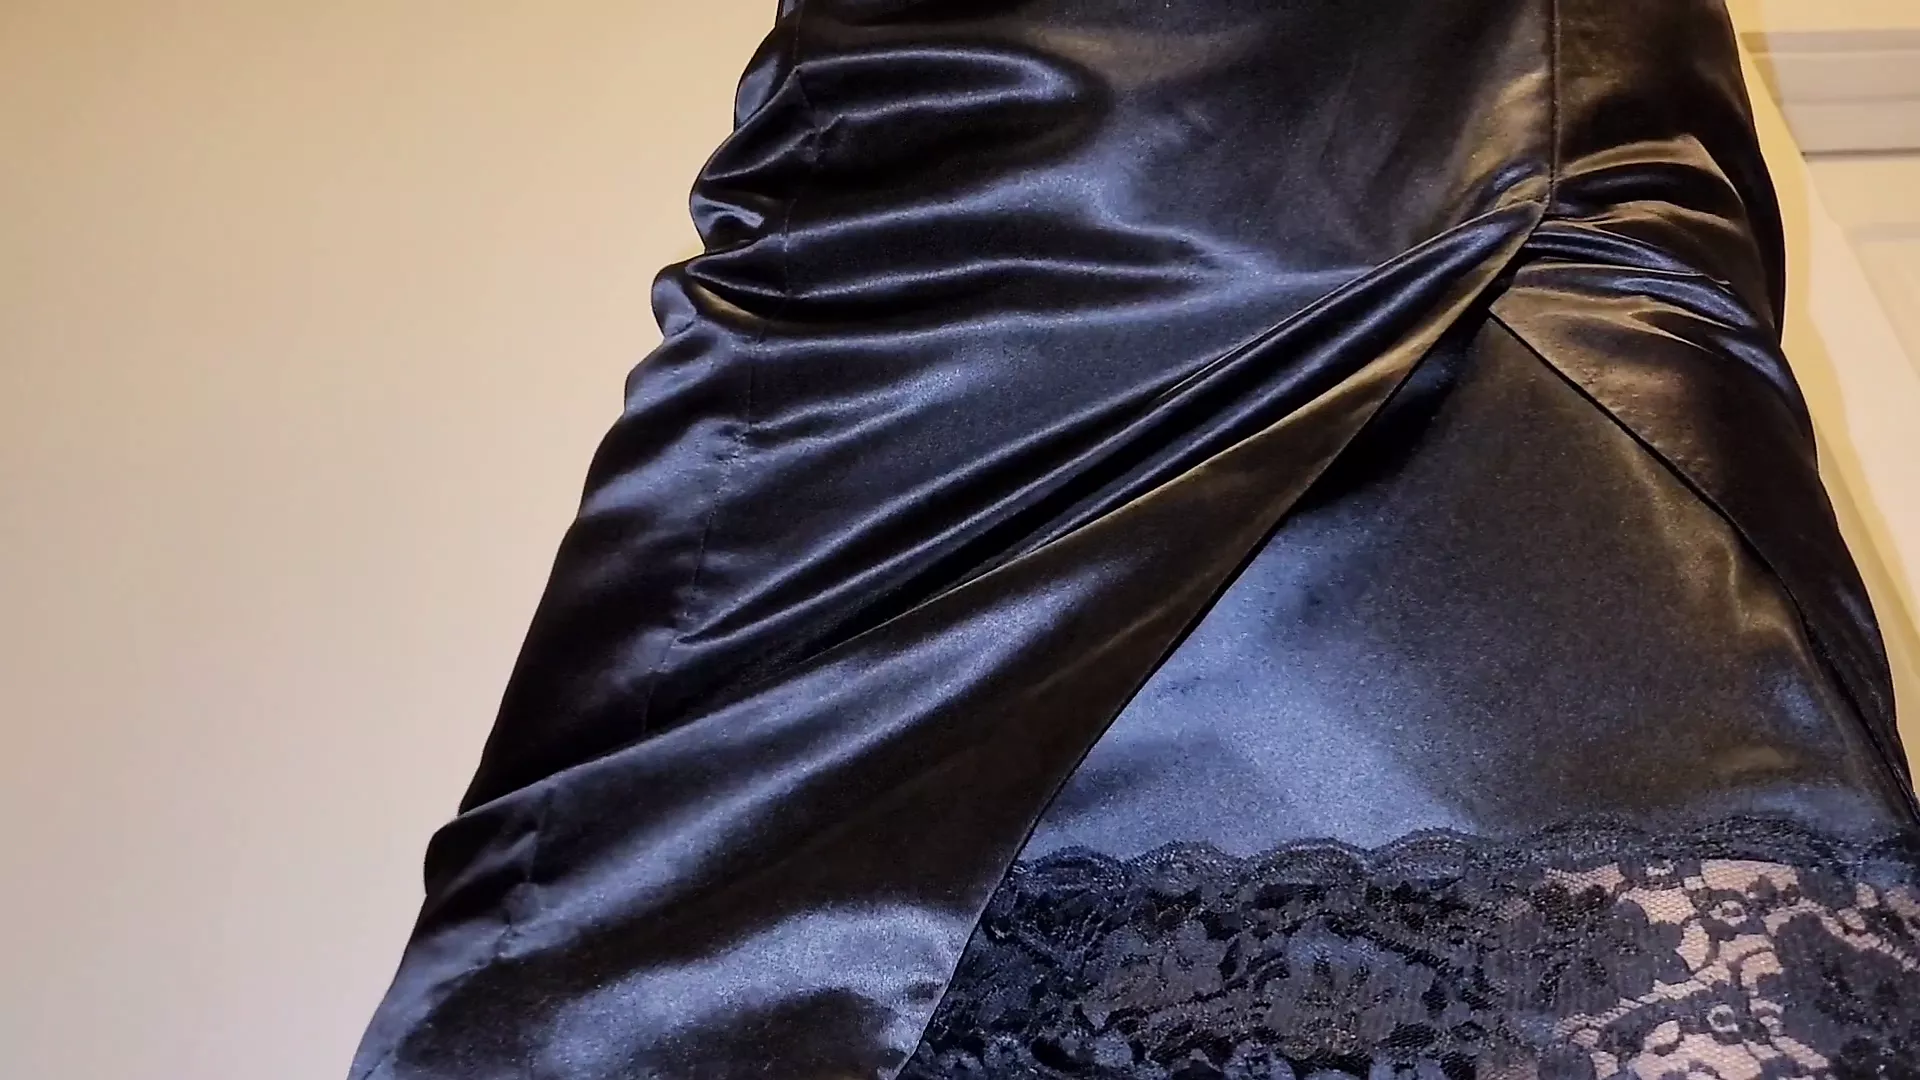 Black Liquid Satin Skirt with Black Satin Half Slip | xHamster